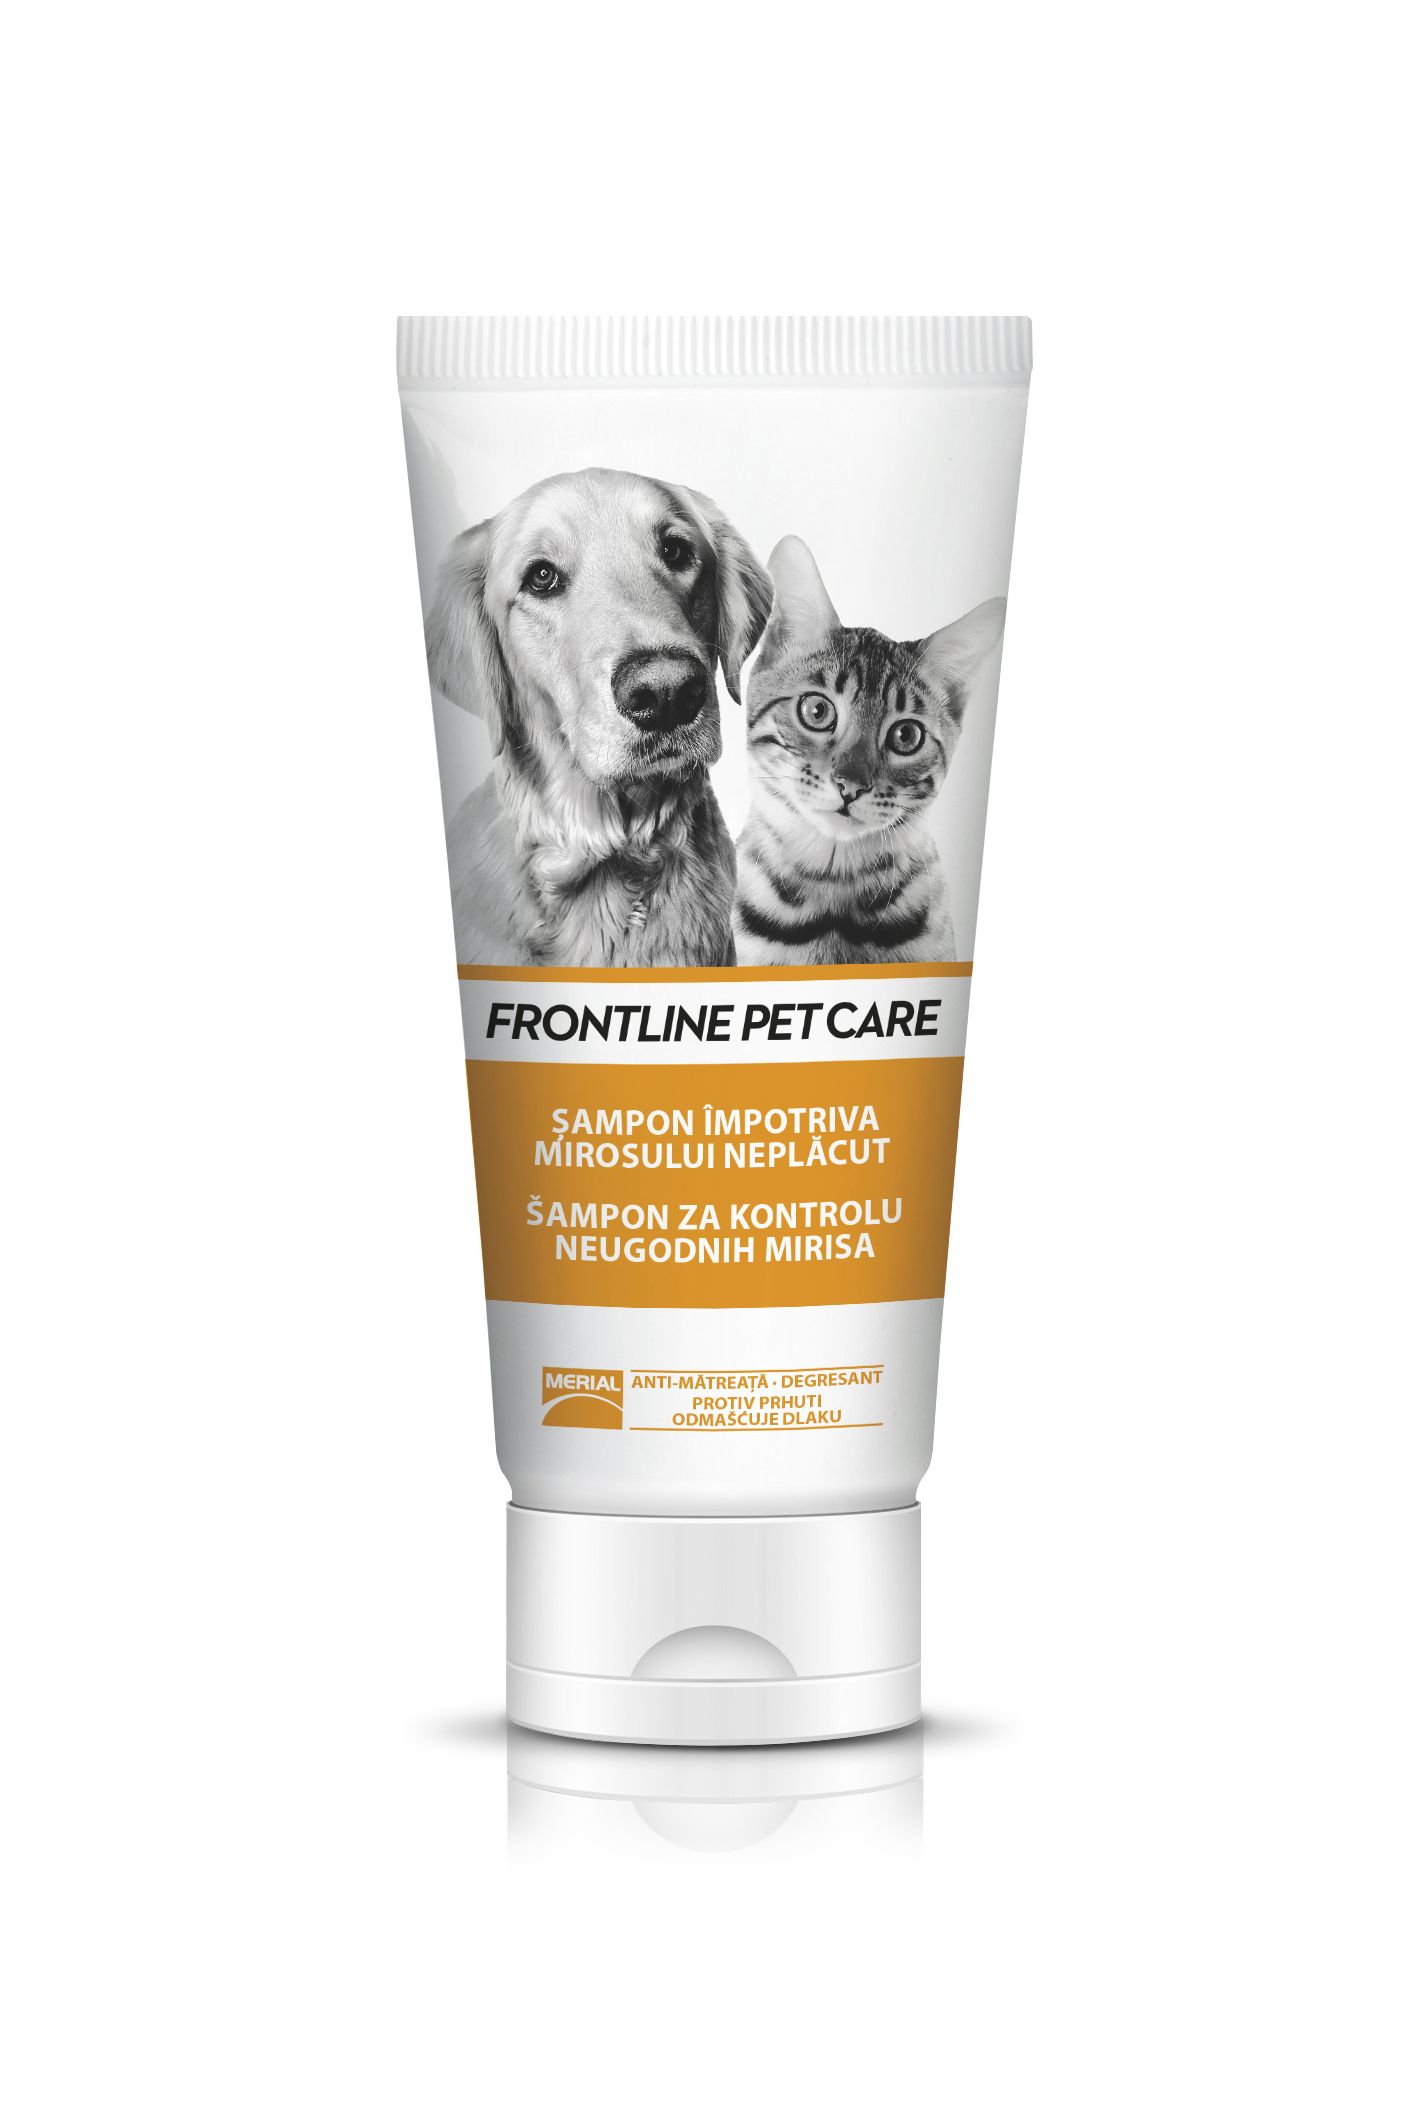 Frontline Pet Care Odor Control, 200 ml petmart